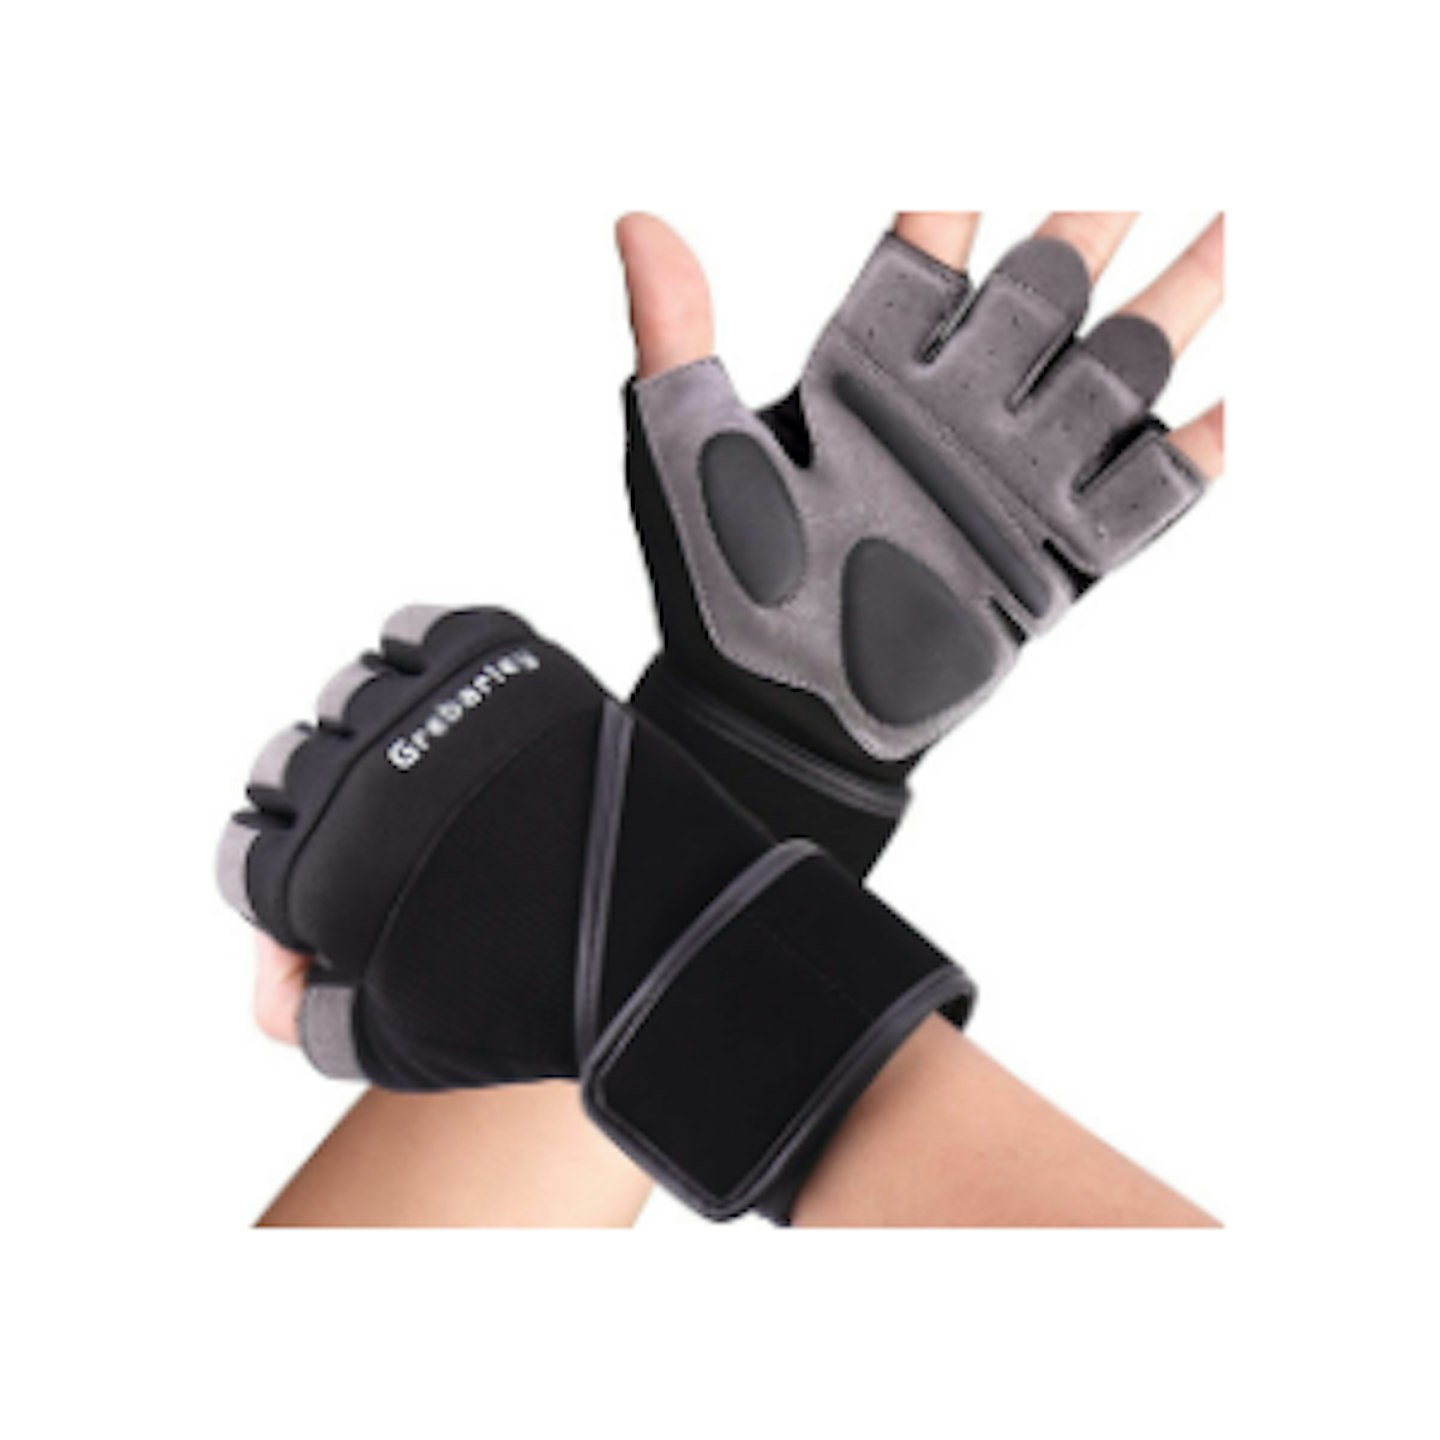 Premium Weightlifting Gym Gloves | Improve Your Grip & Performance